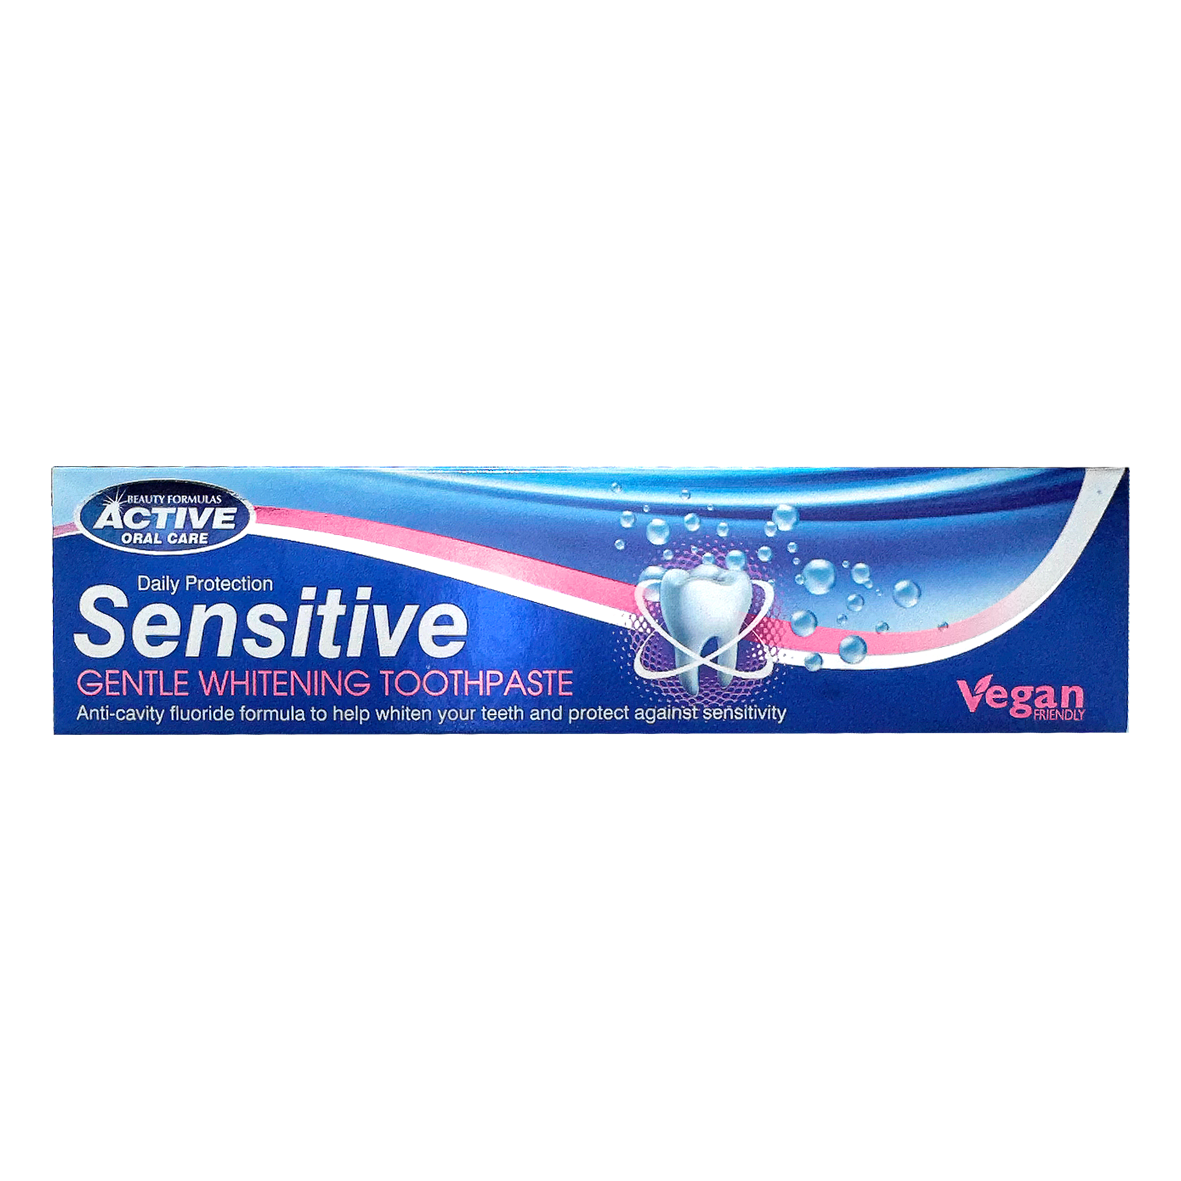 Sensitive gentle whitening toothpaste.